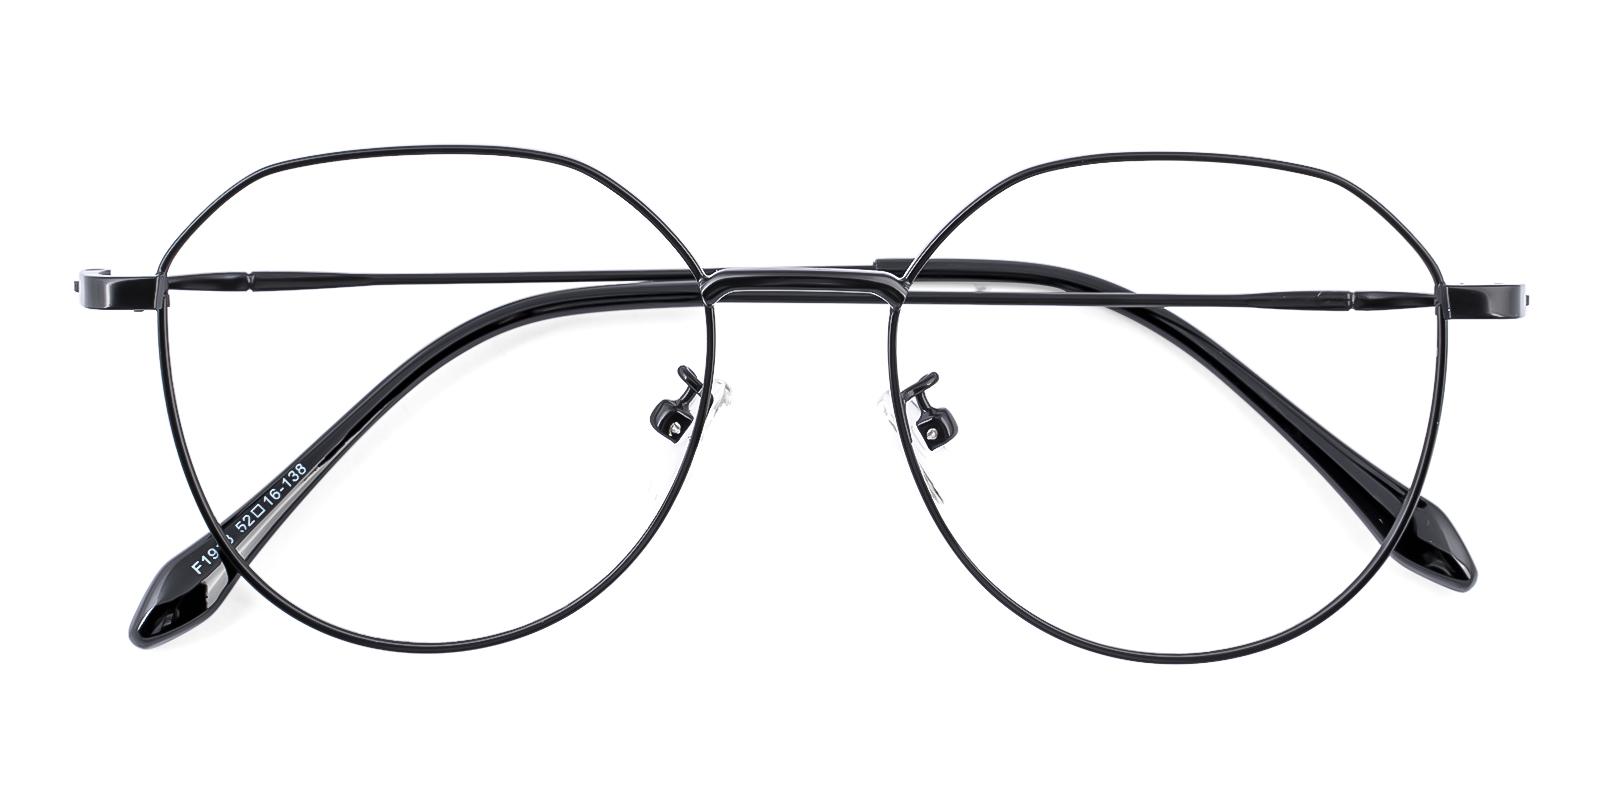 Traity Black Metal Eyeglasses , NosePads Frames from ABBE Glasses